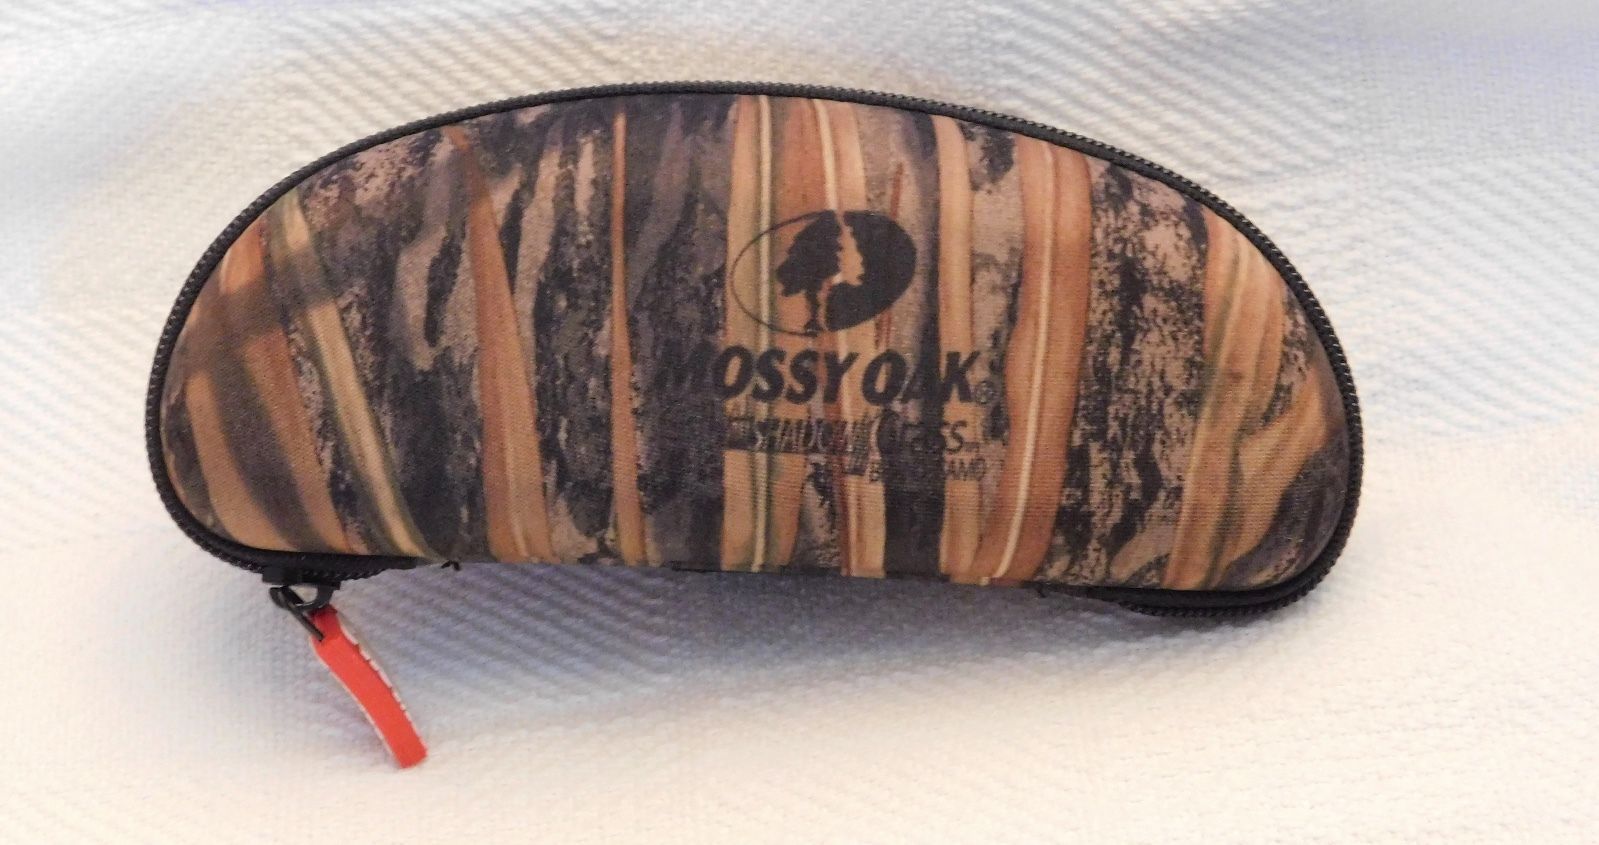 Chums Mossy Oak Hard Side Glasses Case - $9.99